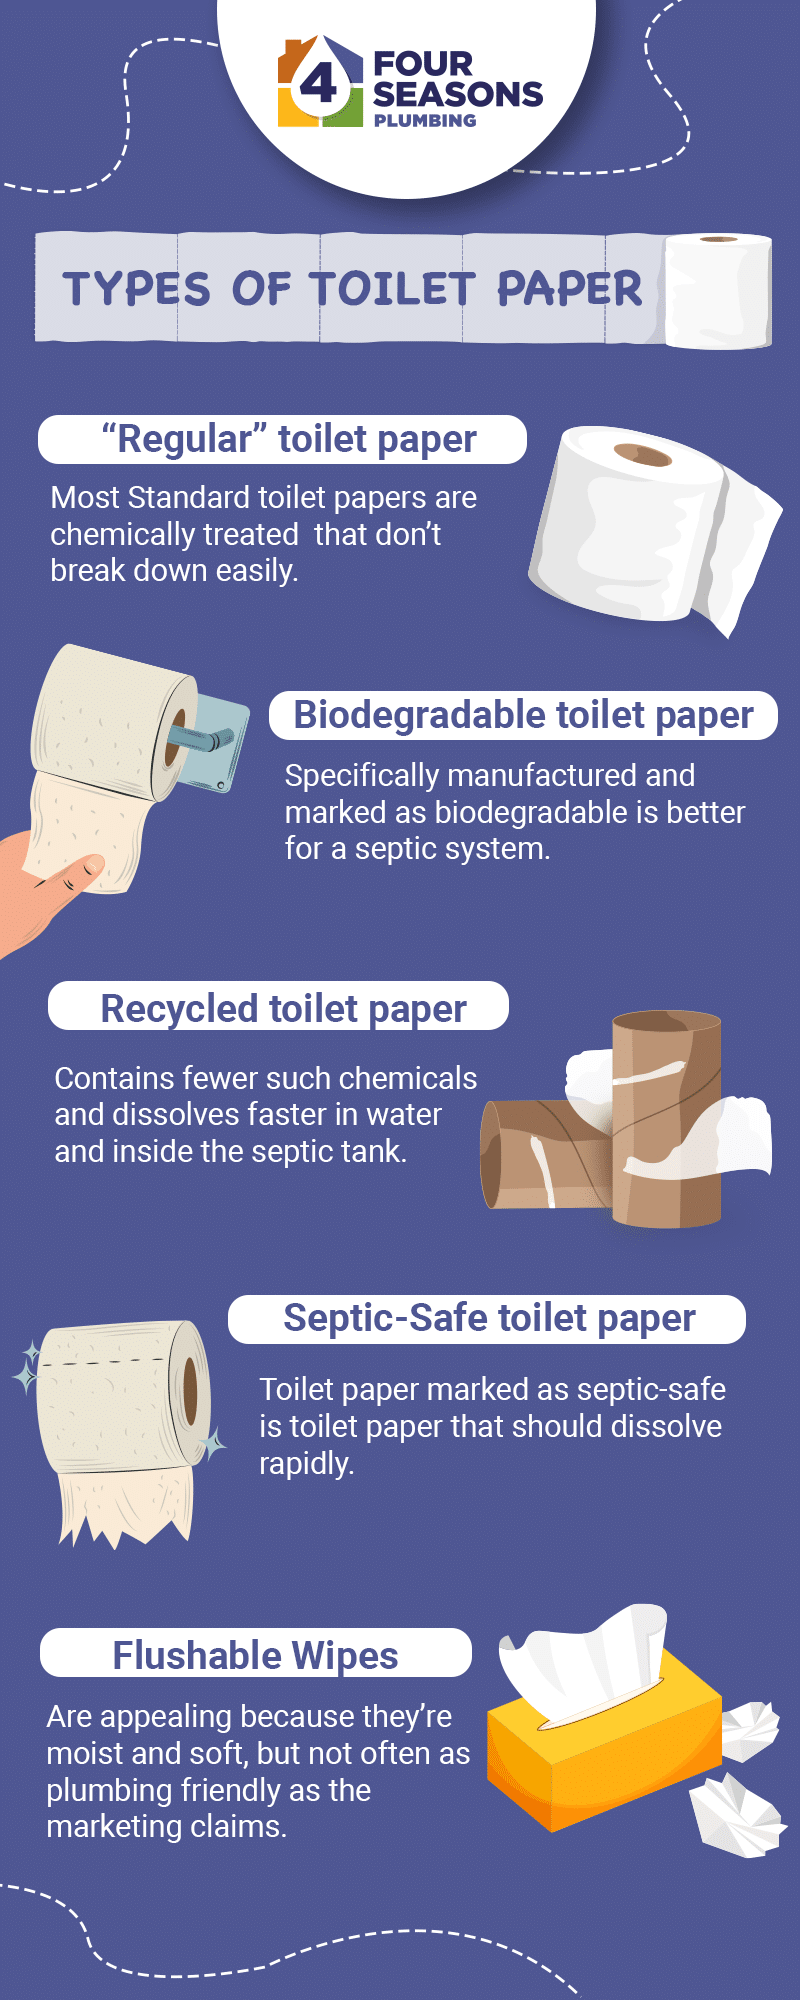 Toilet Paper free digital stamp